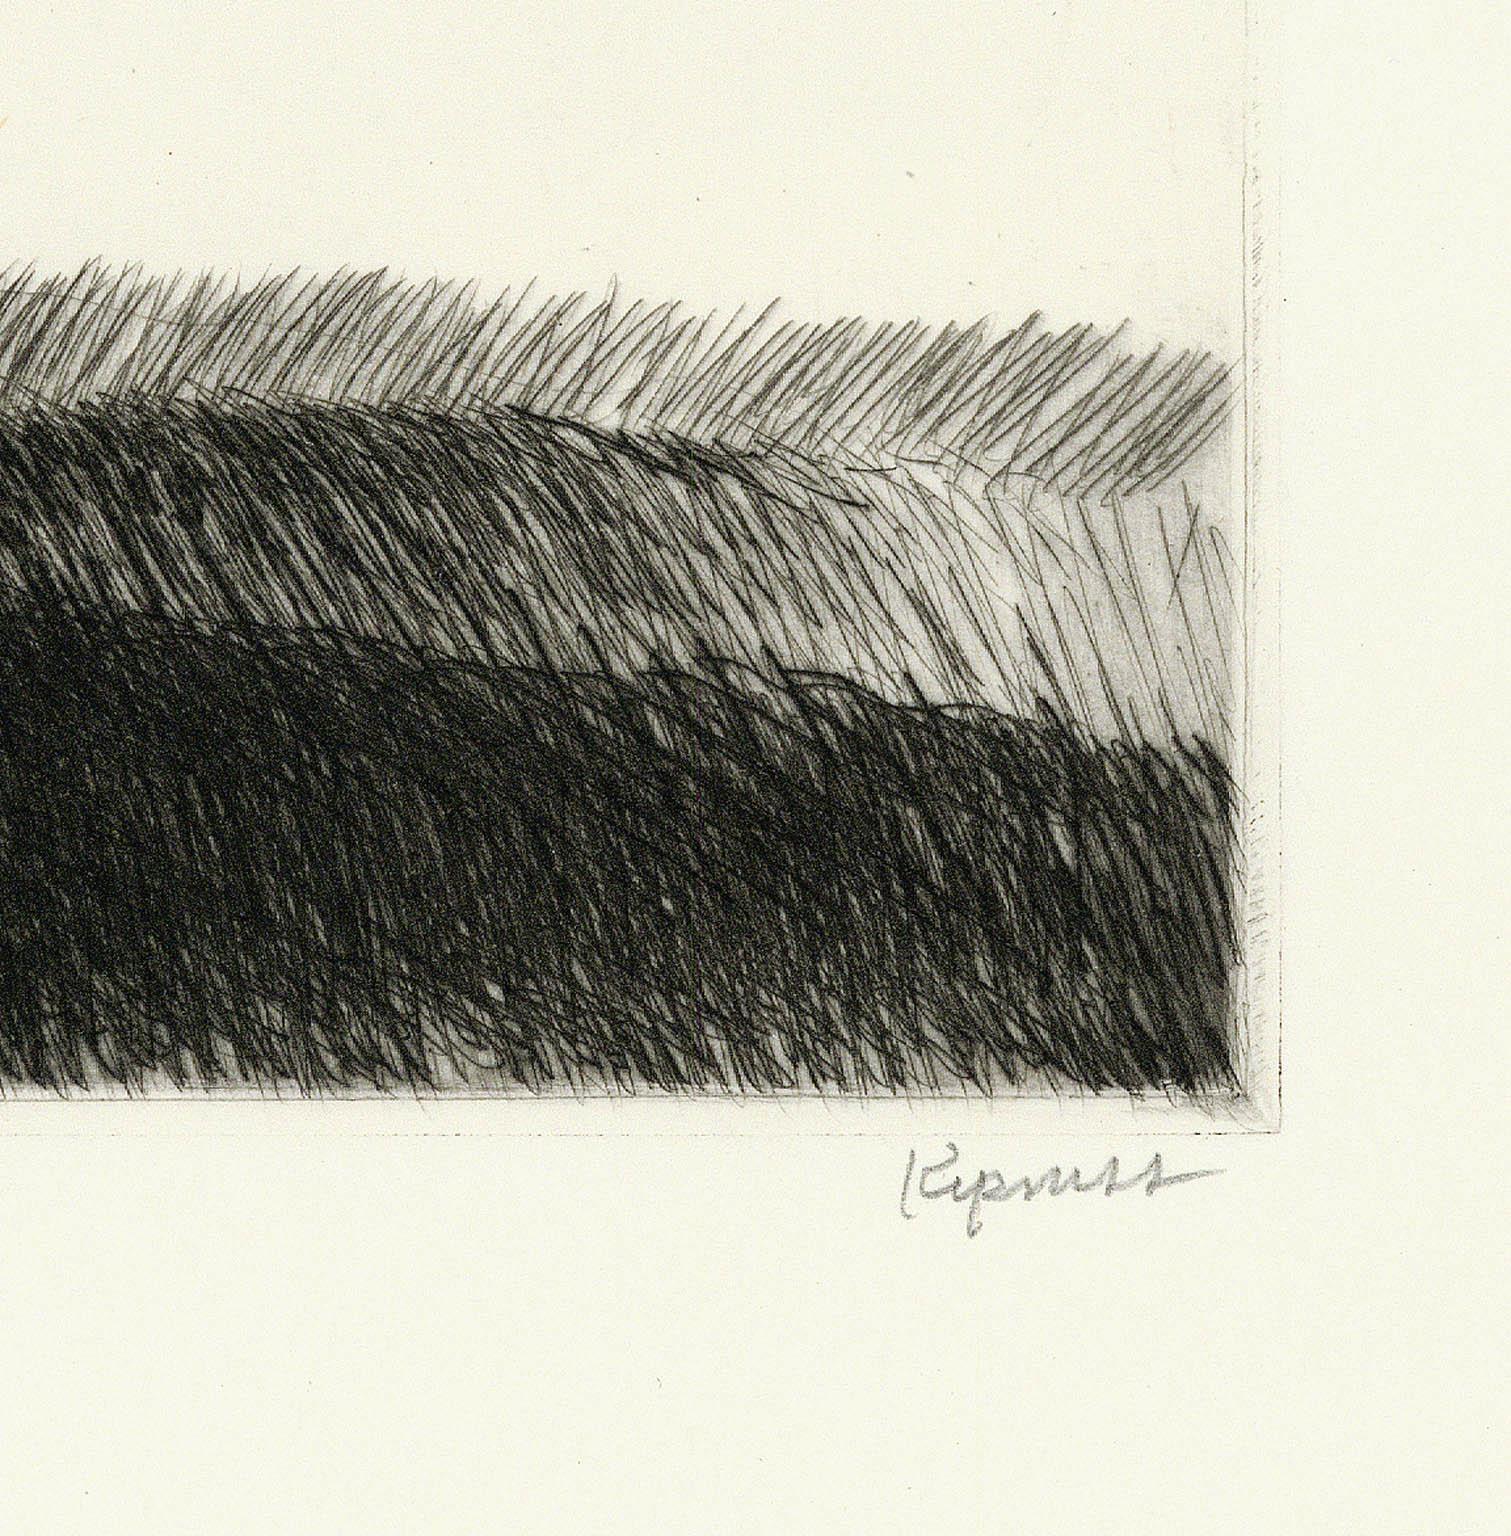 A small copse in a field. - Print by Robert Kipniss